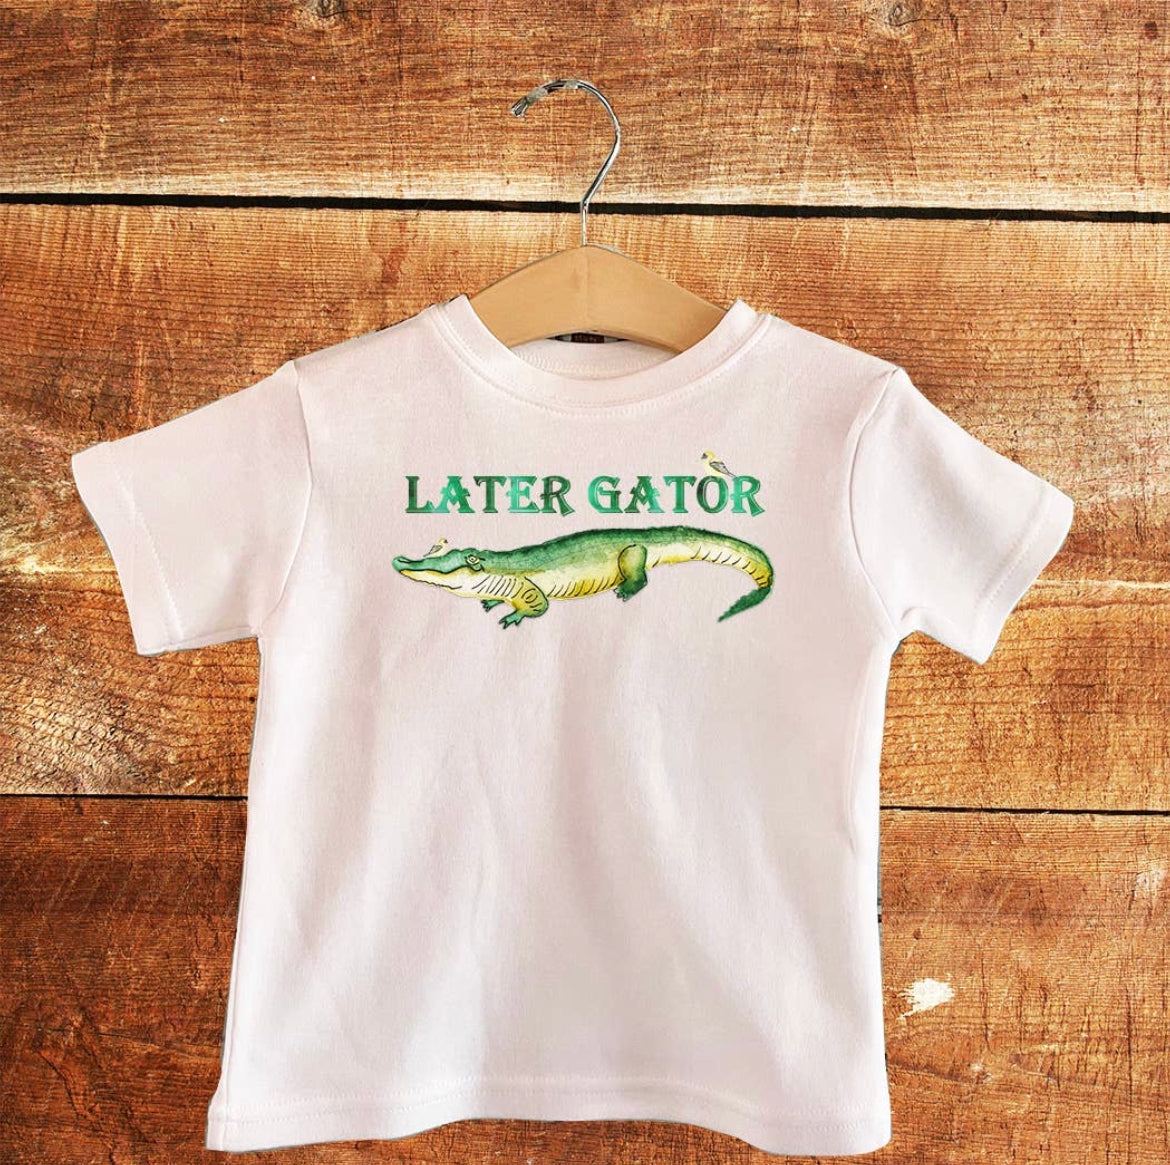 Later Gator T-shirt